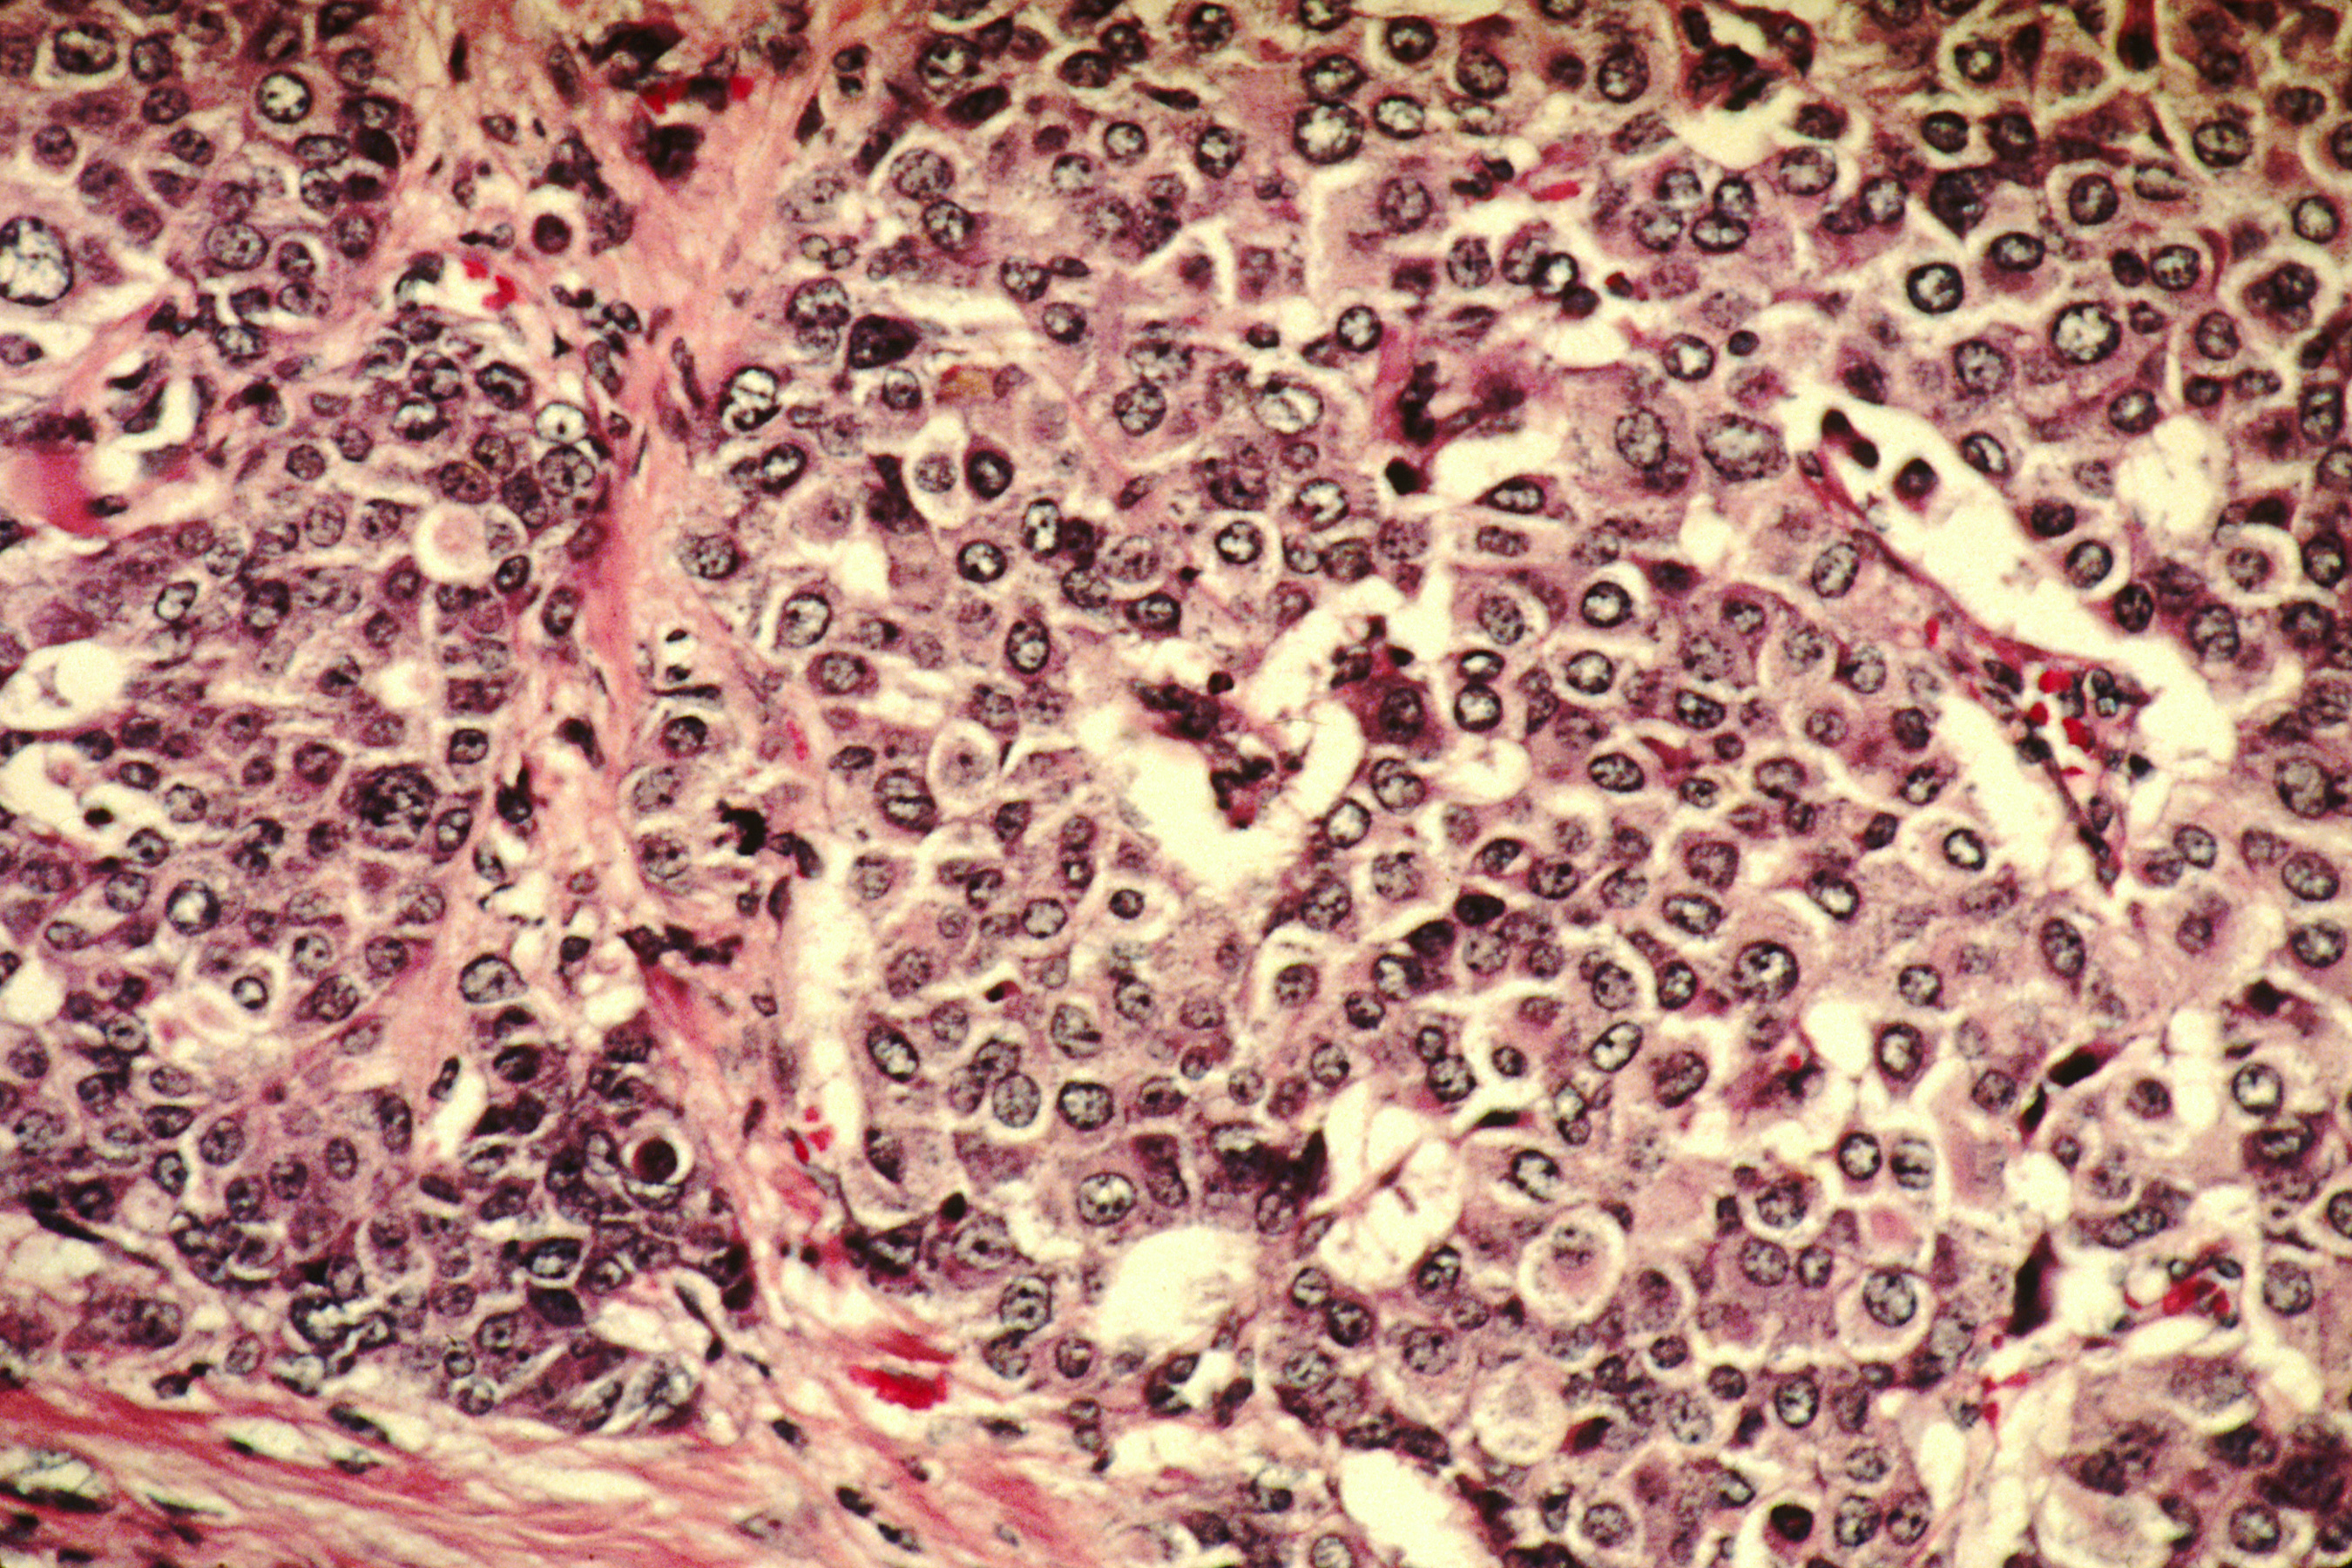 Células de cáncer de mama. Fuente: Wikipedia.